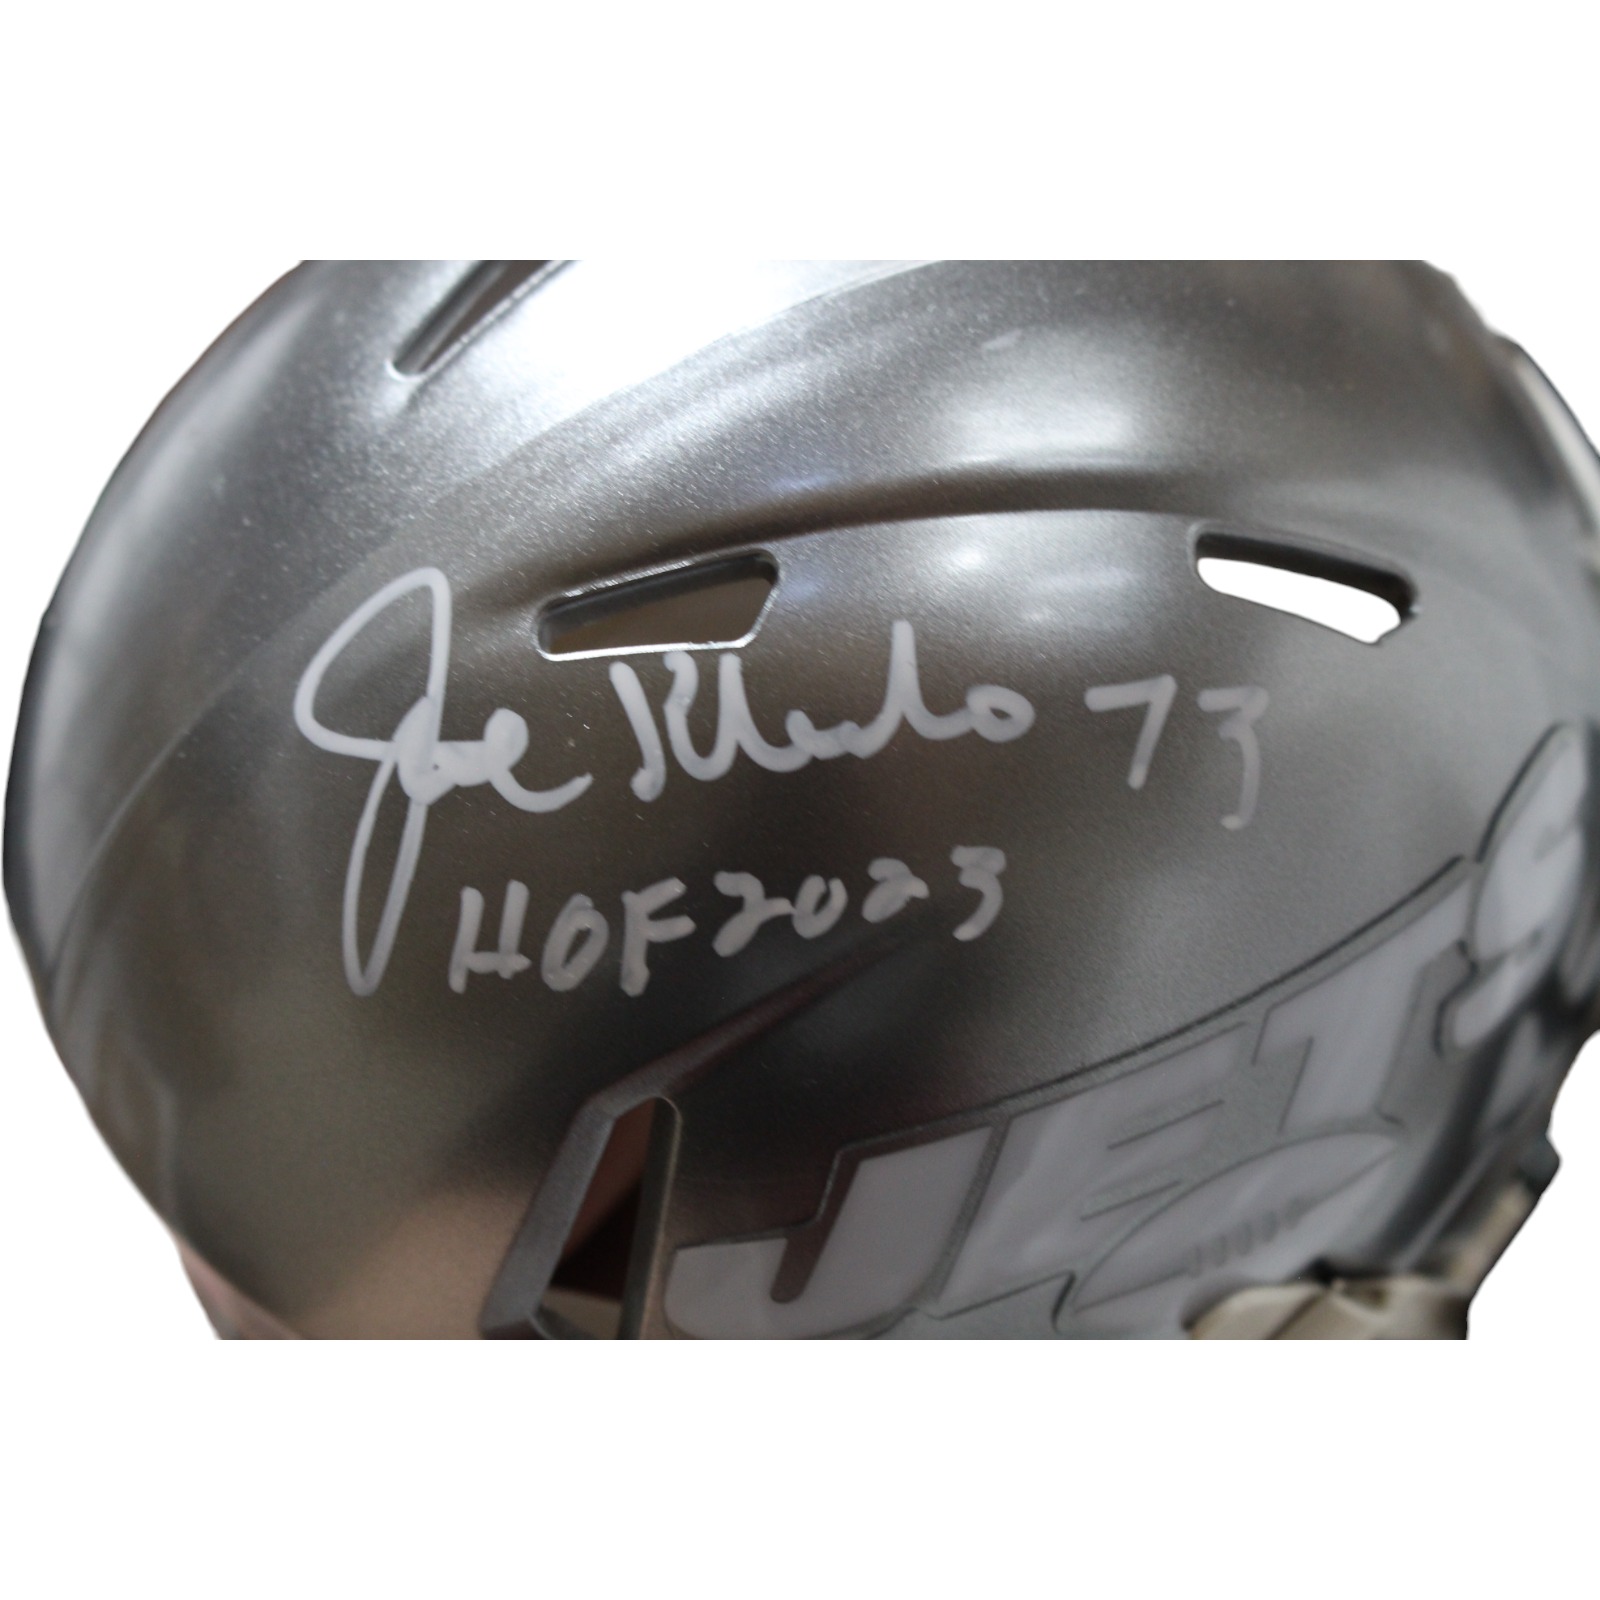 Joe Klecko Autographed/Signed New York Jets Flash Mini Helmet Beckett